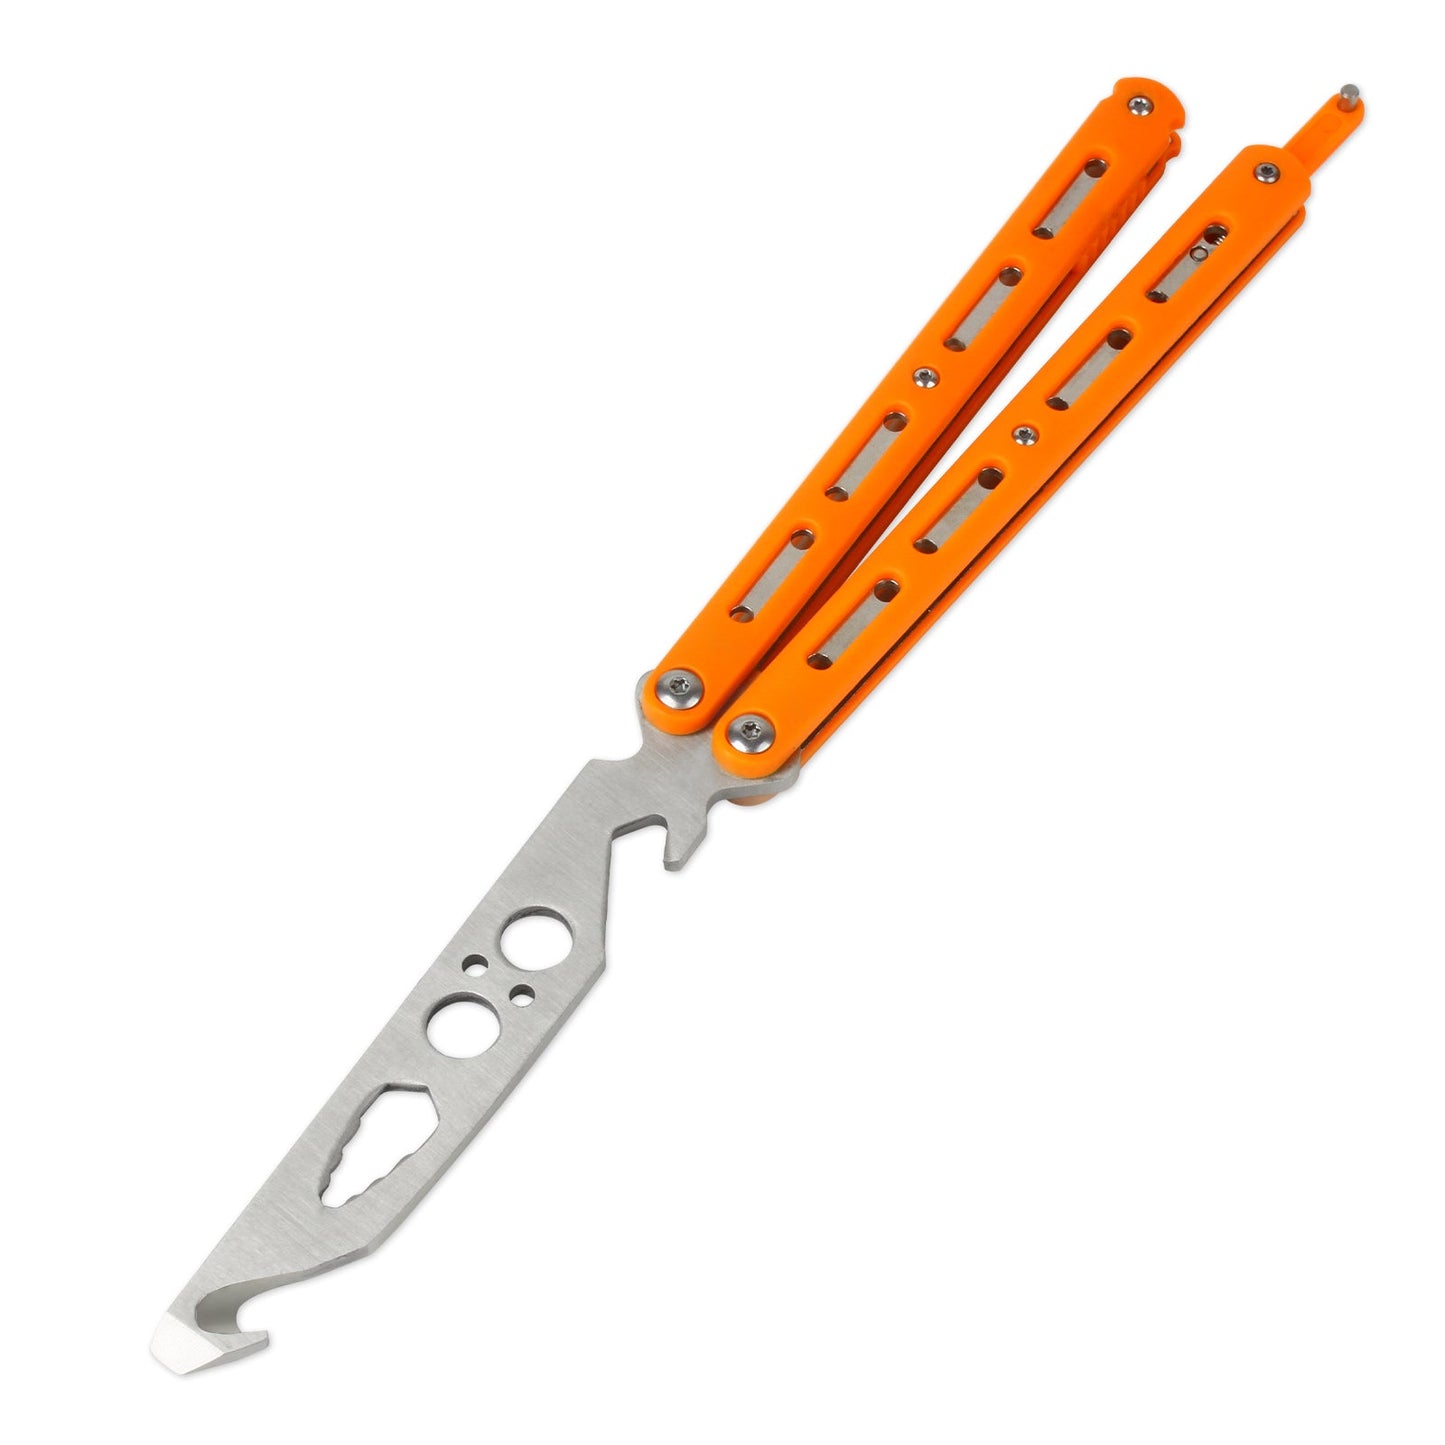 Andux Balisong Butterfly Knife Bottle Opener Tool Stainless Steel Carry-on Hook Folding Multitool Orange BLCS555